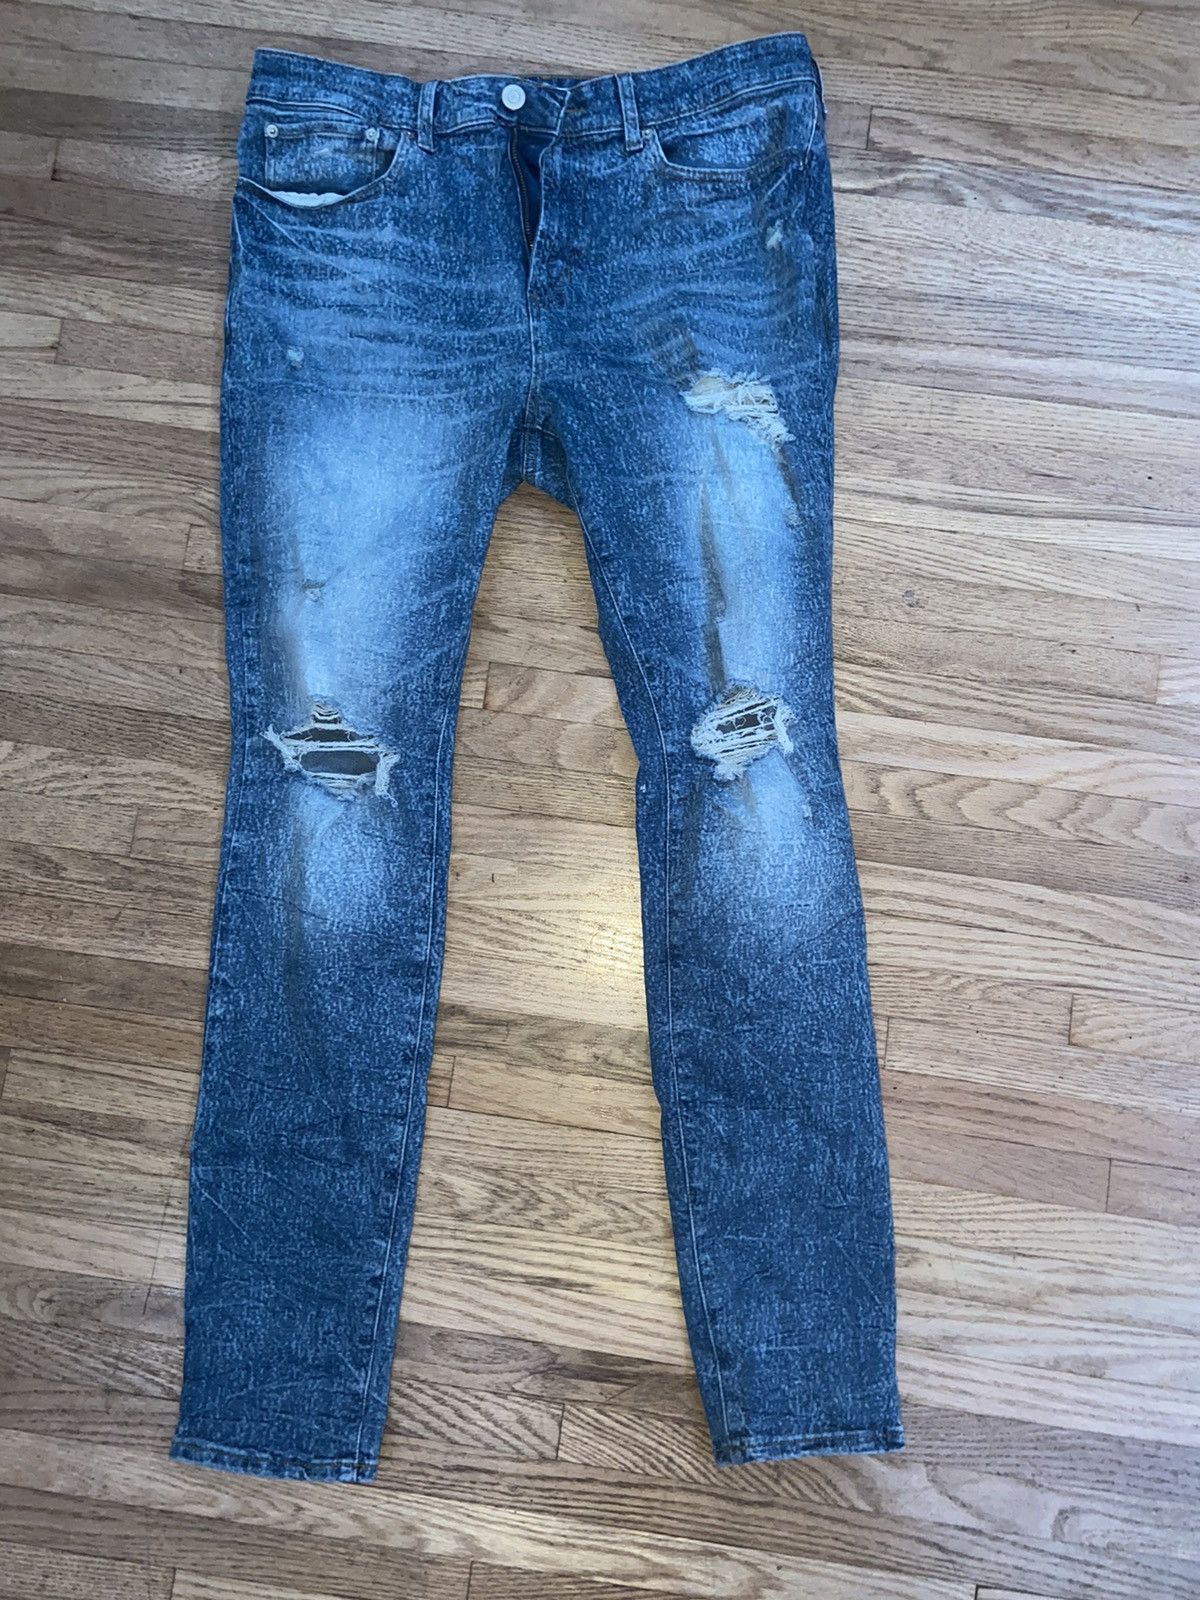 Pacsun Pacsun Ripped Jeans Size US 34 / EU 50 - 2 Preview